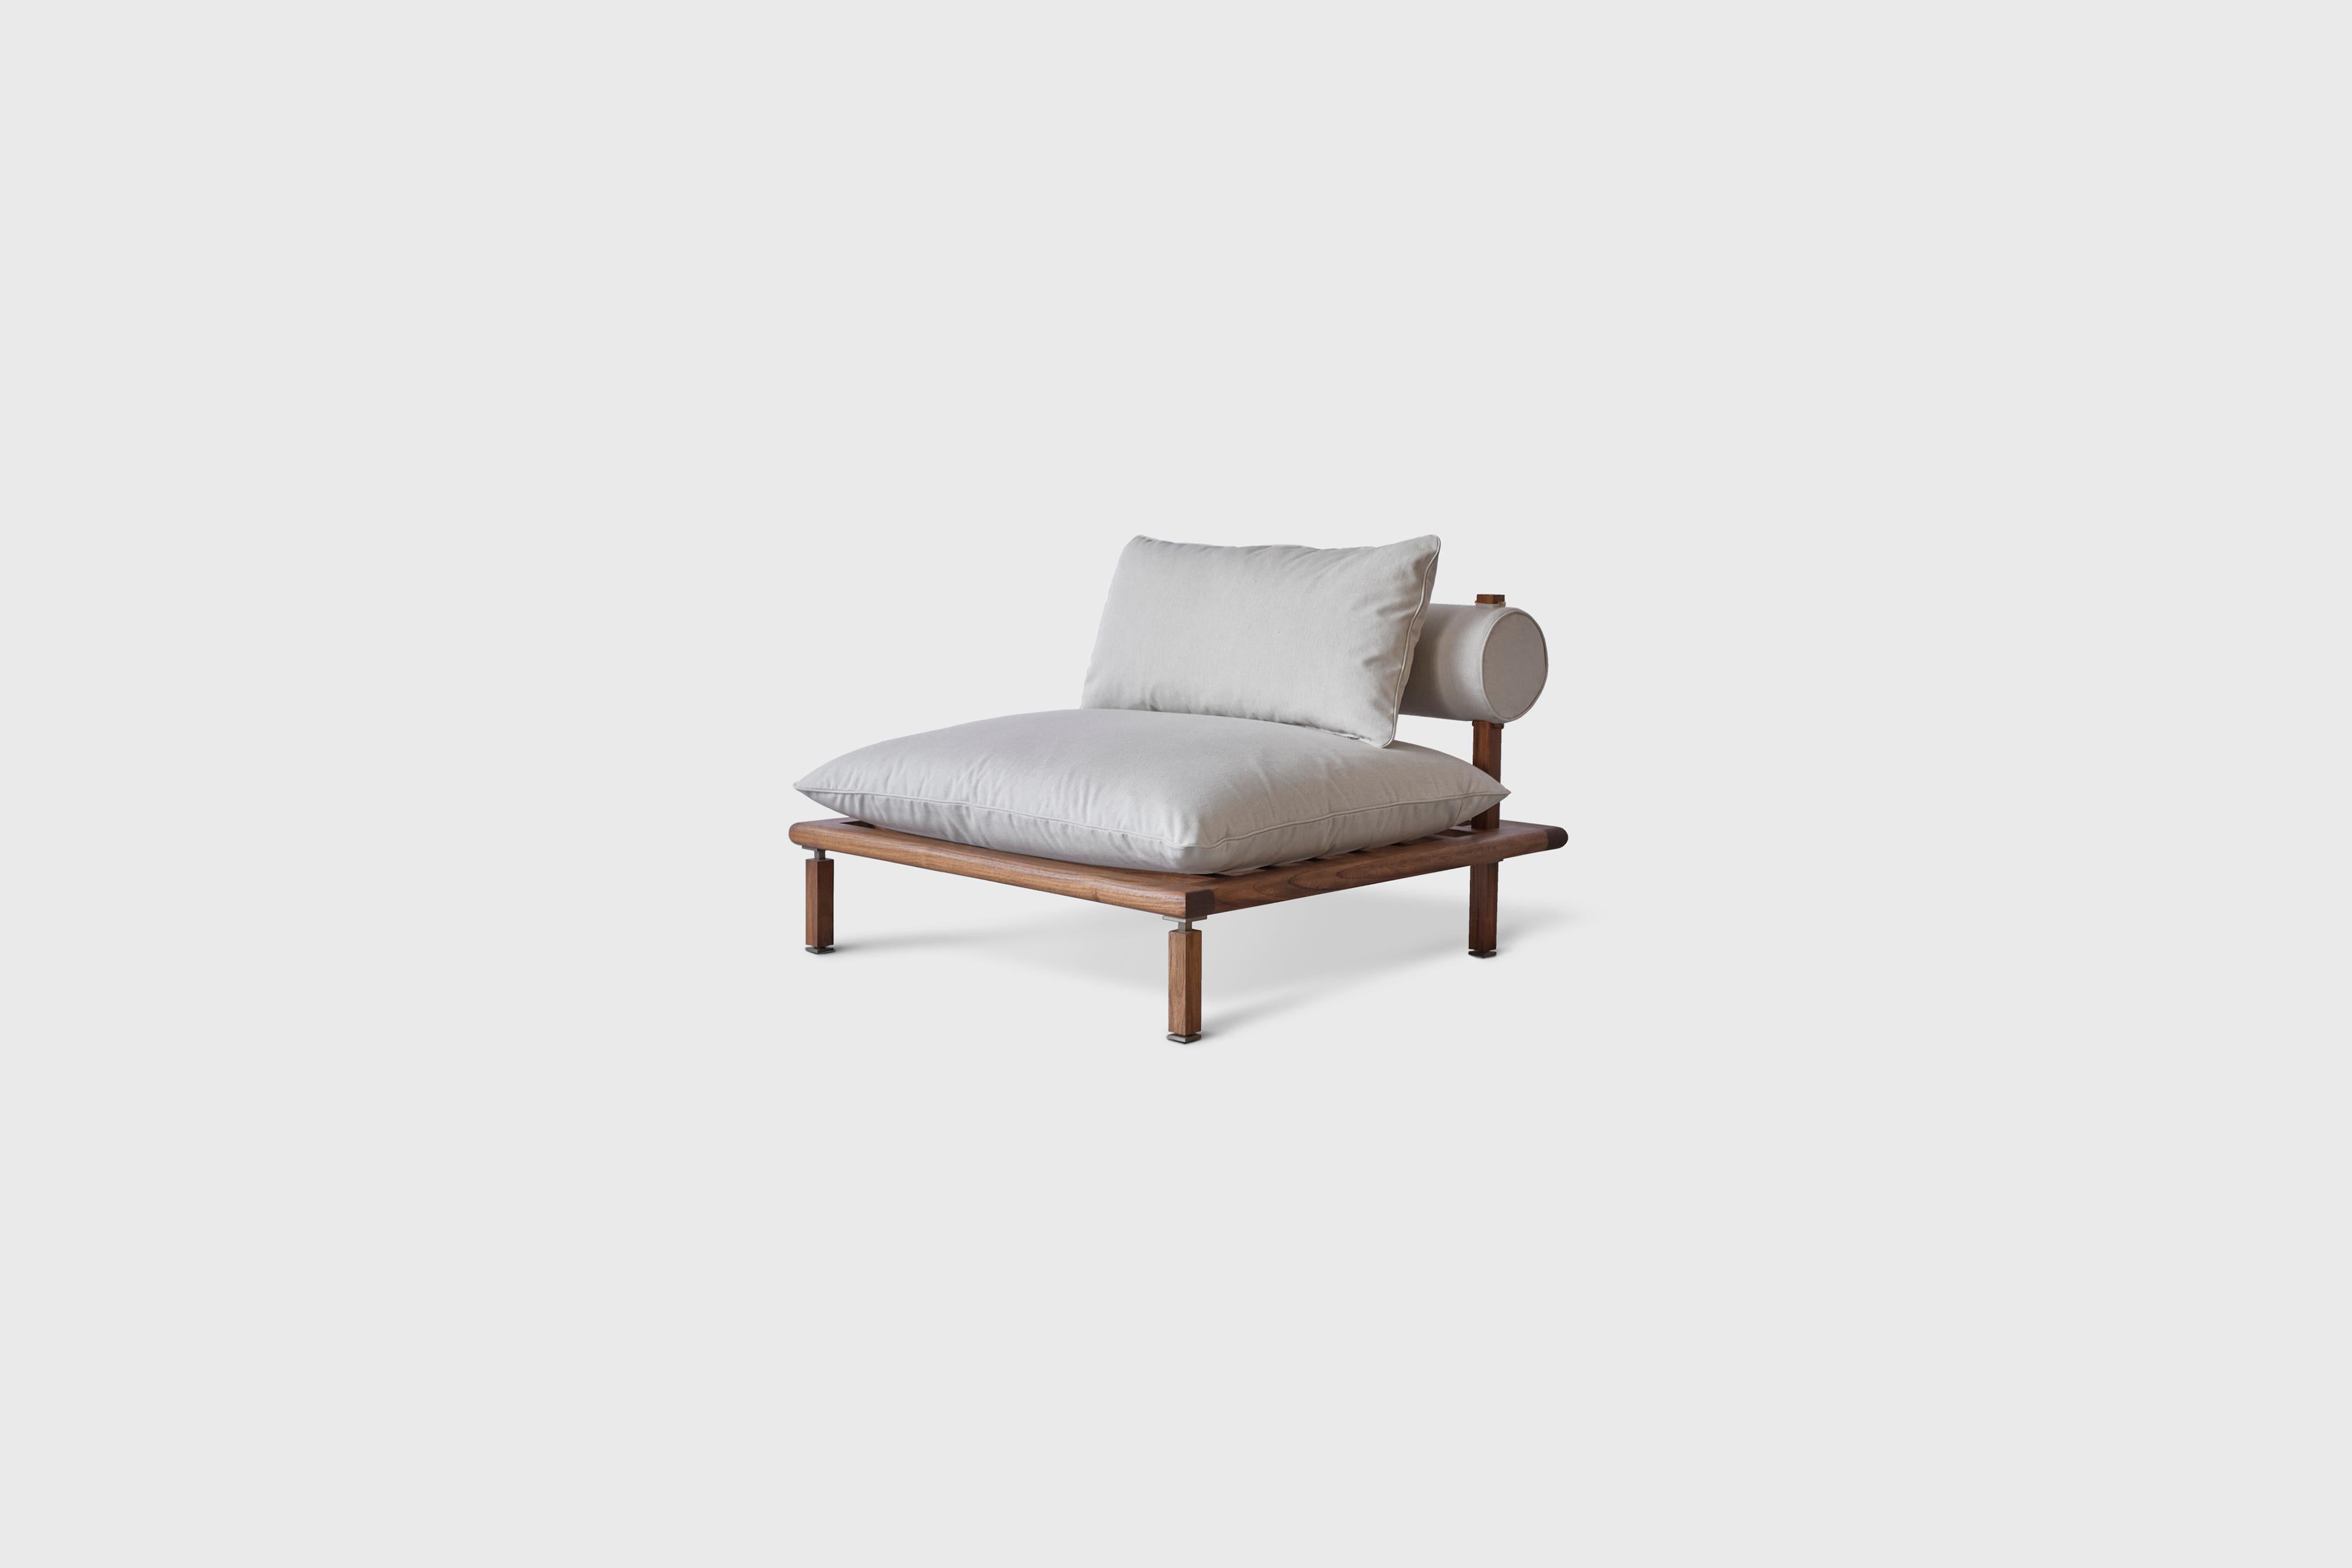 Nerthus sofa
Modular sofa in teak frame and Champaign Stainless Steel Details
Designer - Alexander Diaz Anderson 

Dimensions: 
BACK MODULE: 
L 108.5cm/42.7”
W 108.5cm/42.7”
H 71.1cm/27.9”
Seat height 40.0cm/15.7”

CHAISE MODULE:
L 108.5cm/42.7”
W